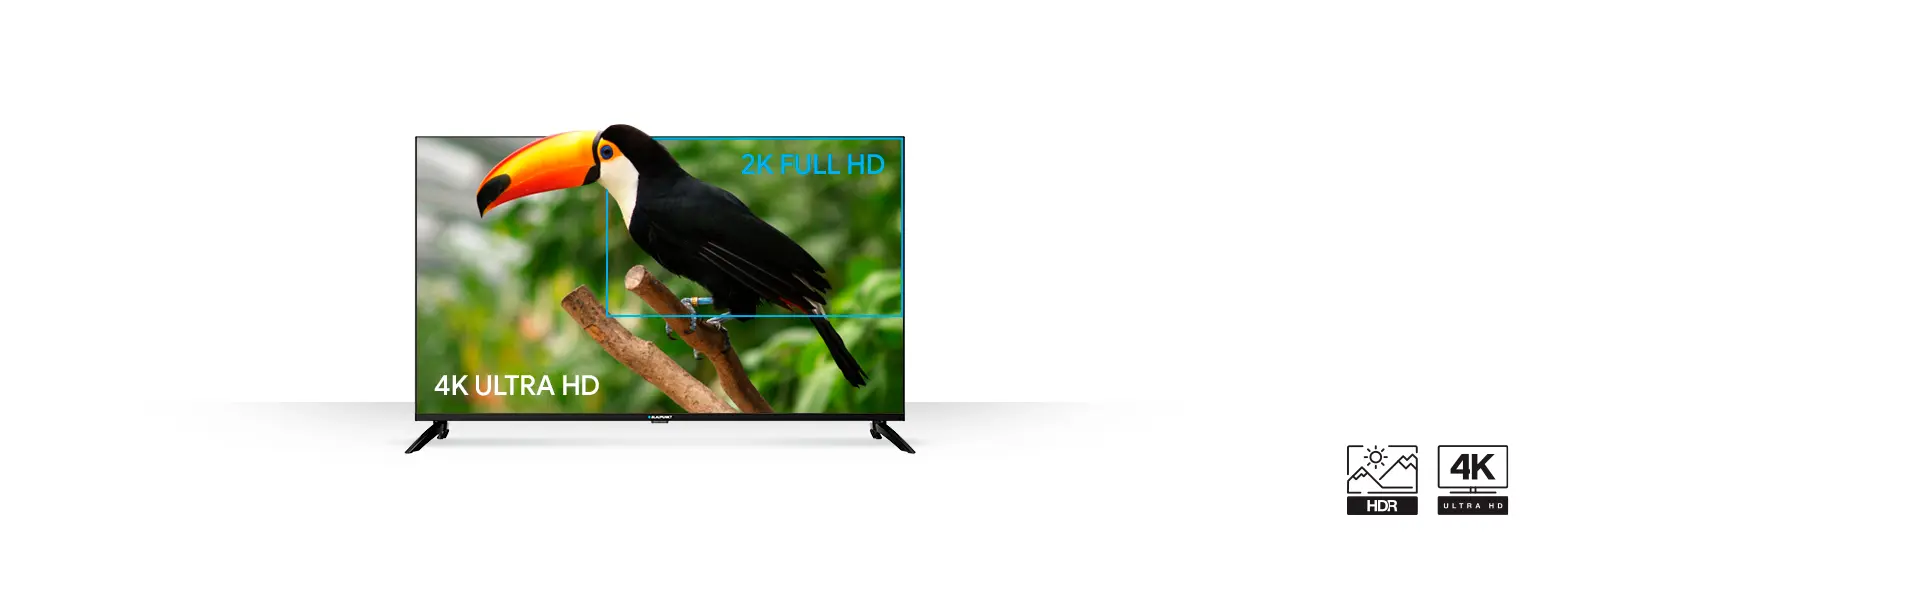 TV 4K Smart TV LED Blaupunkt 43UBC6000